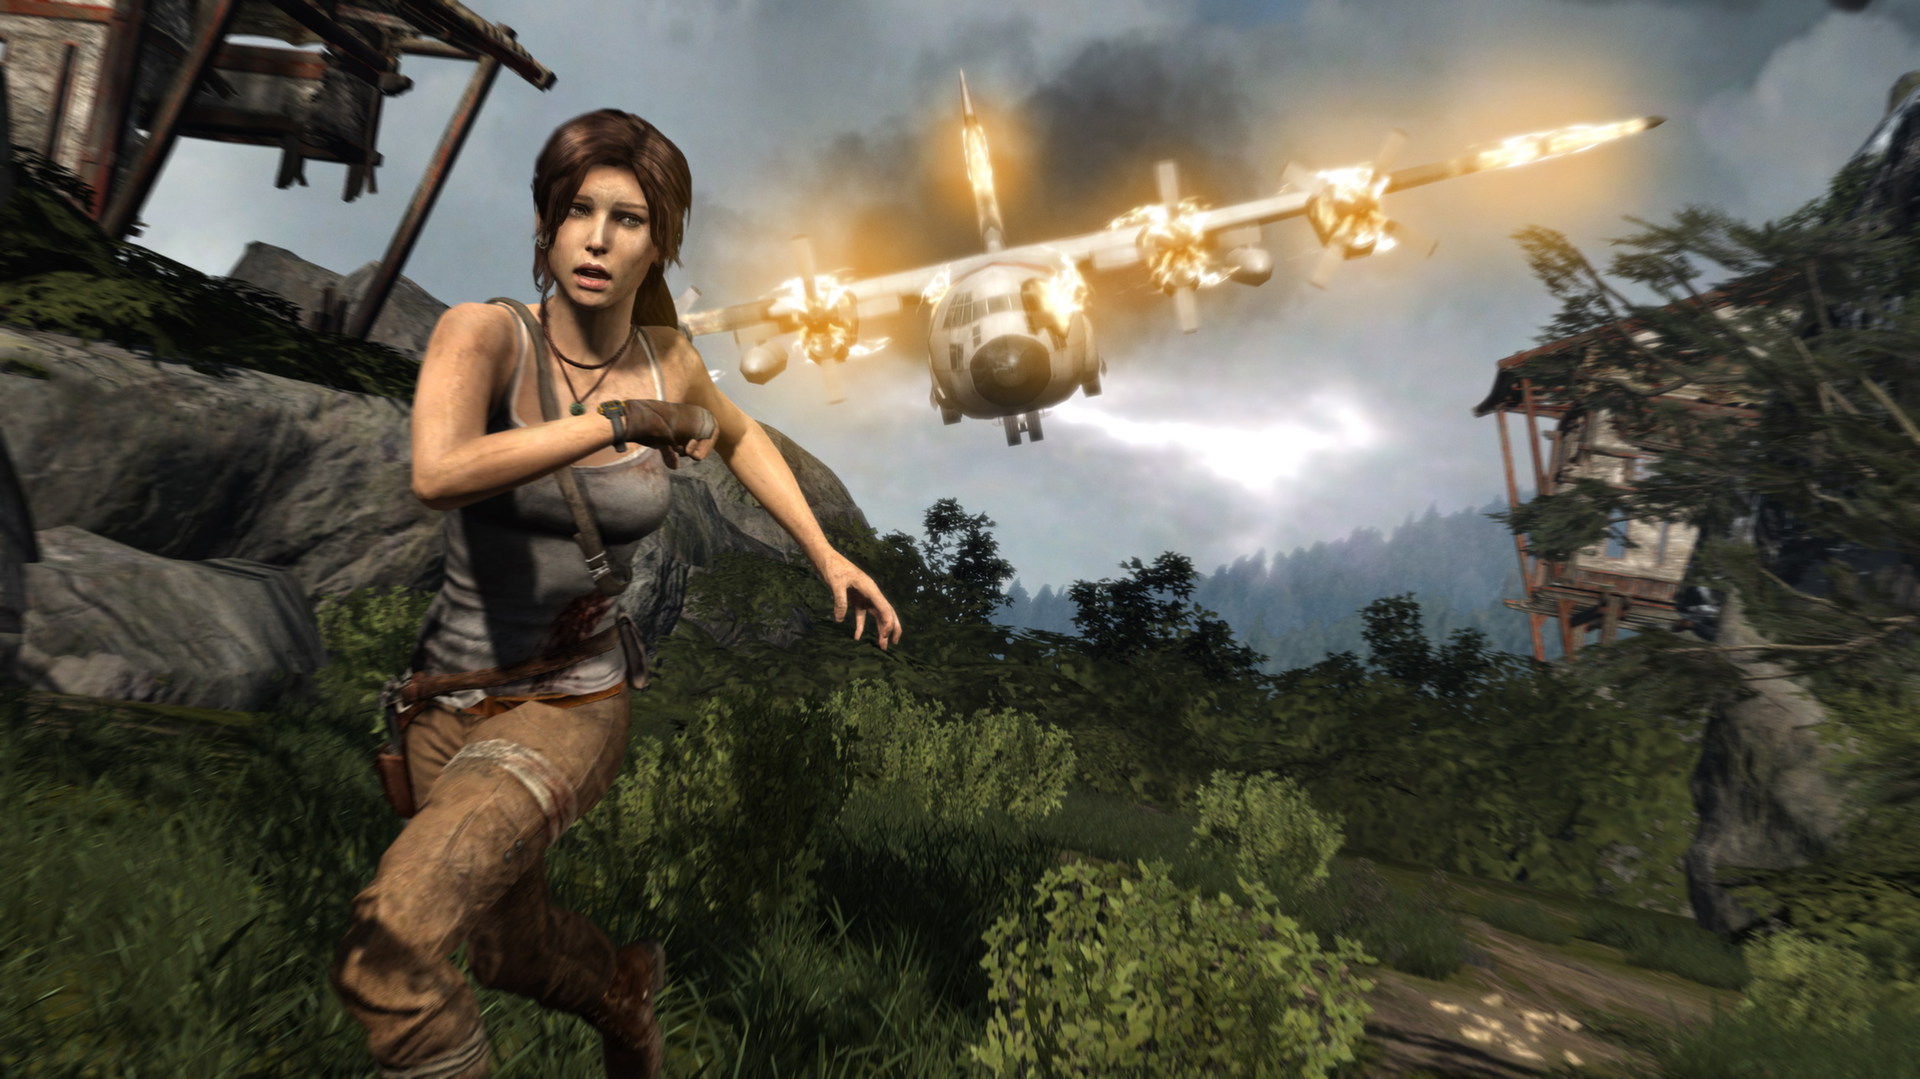 Tomb Raider Square Enix Announces Next Game In The Series